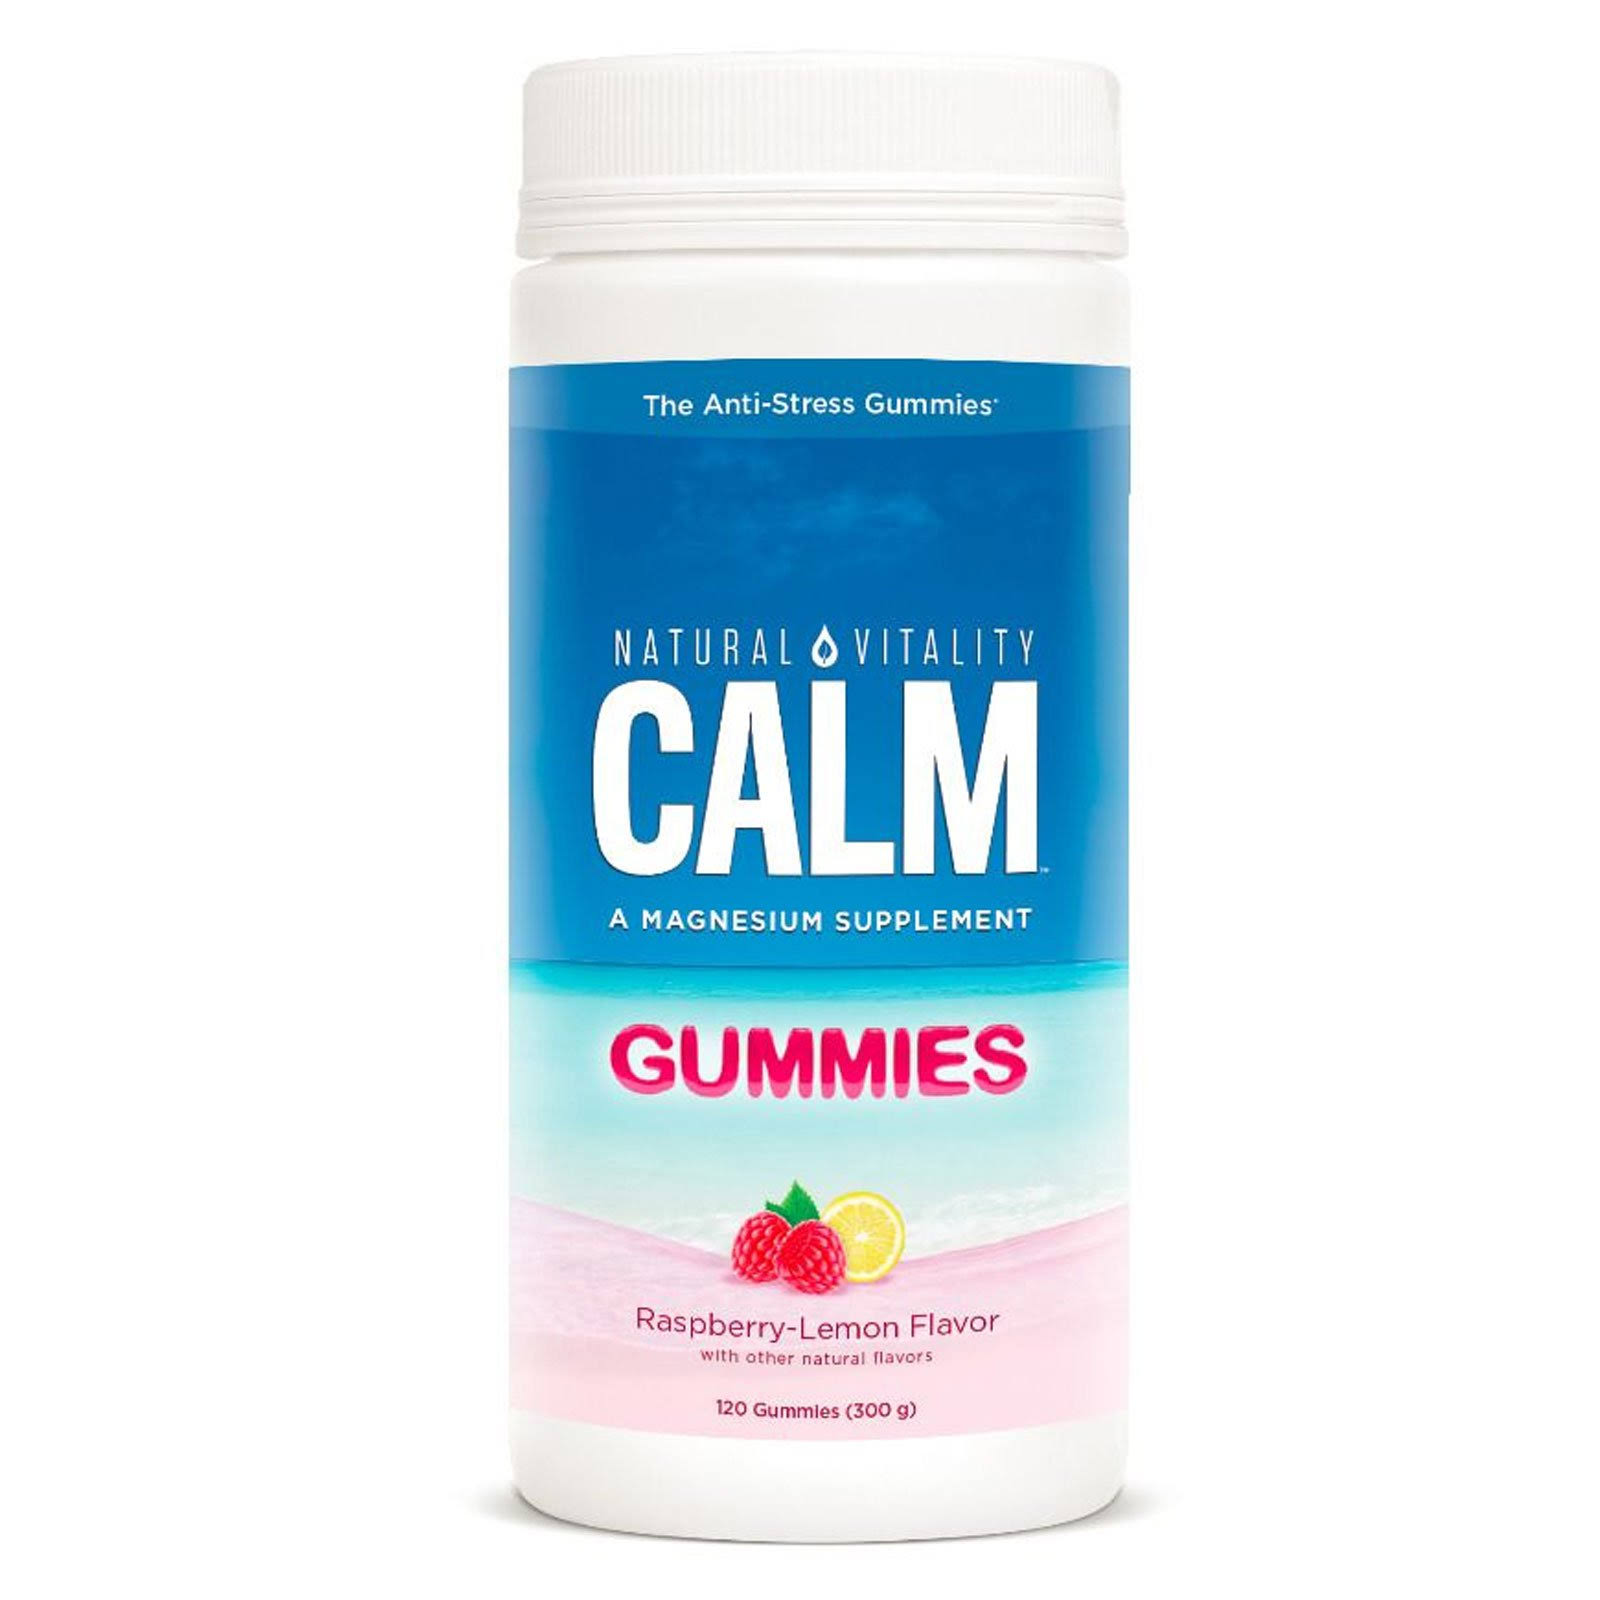 Natural Vitality Calm the Anti-Stress Gummies - Raspberry Lemon, x120